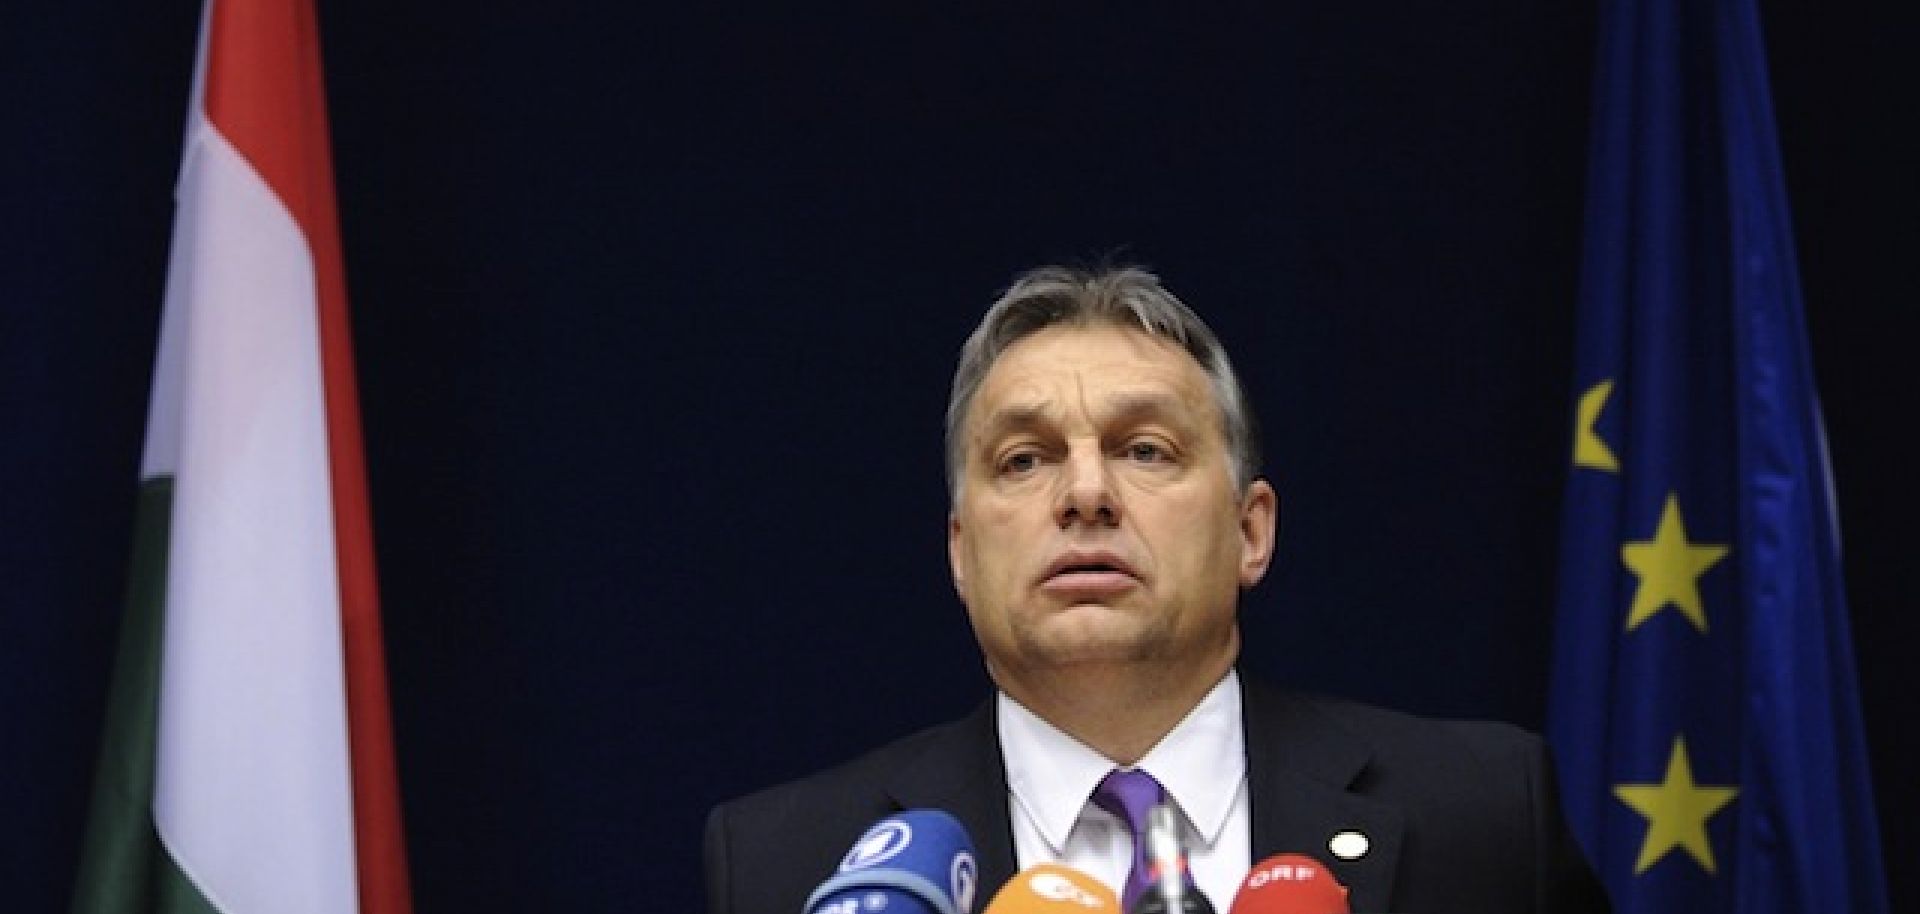 Hungary's Latest Isolationist Step